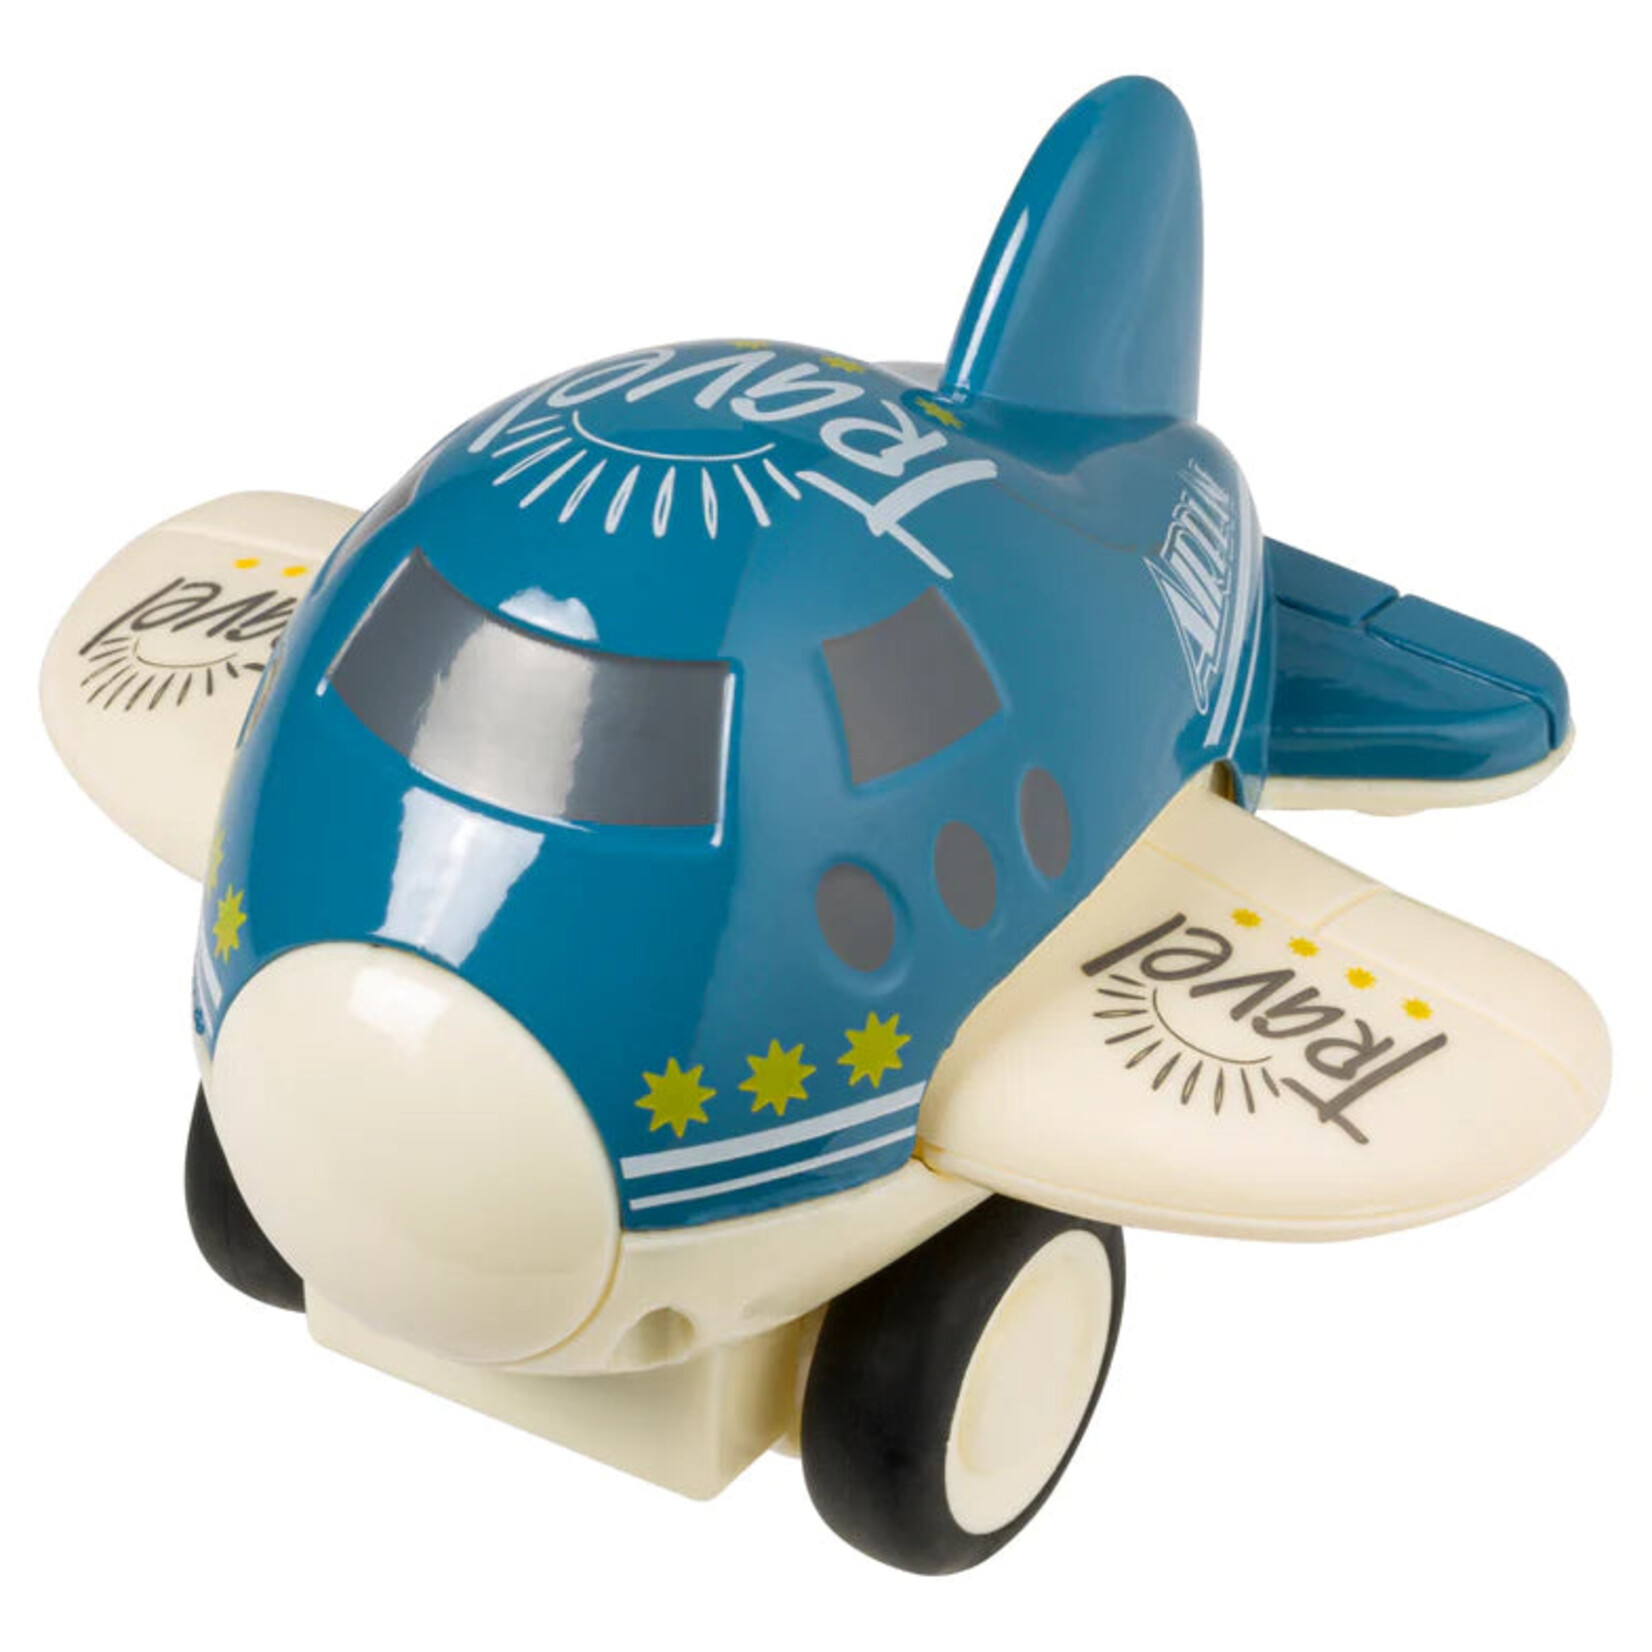 Toysmith Toysmith Mini Friction Plane